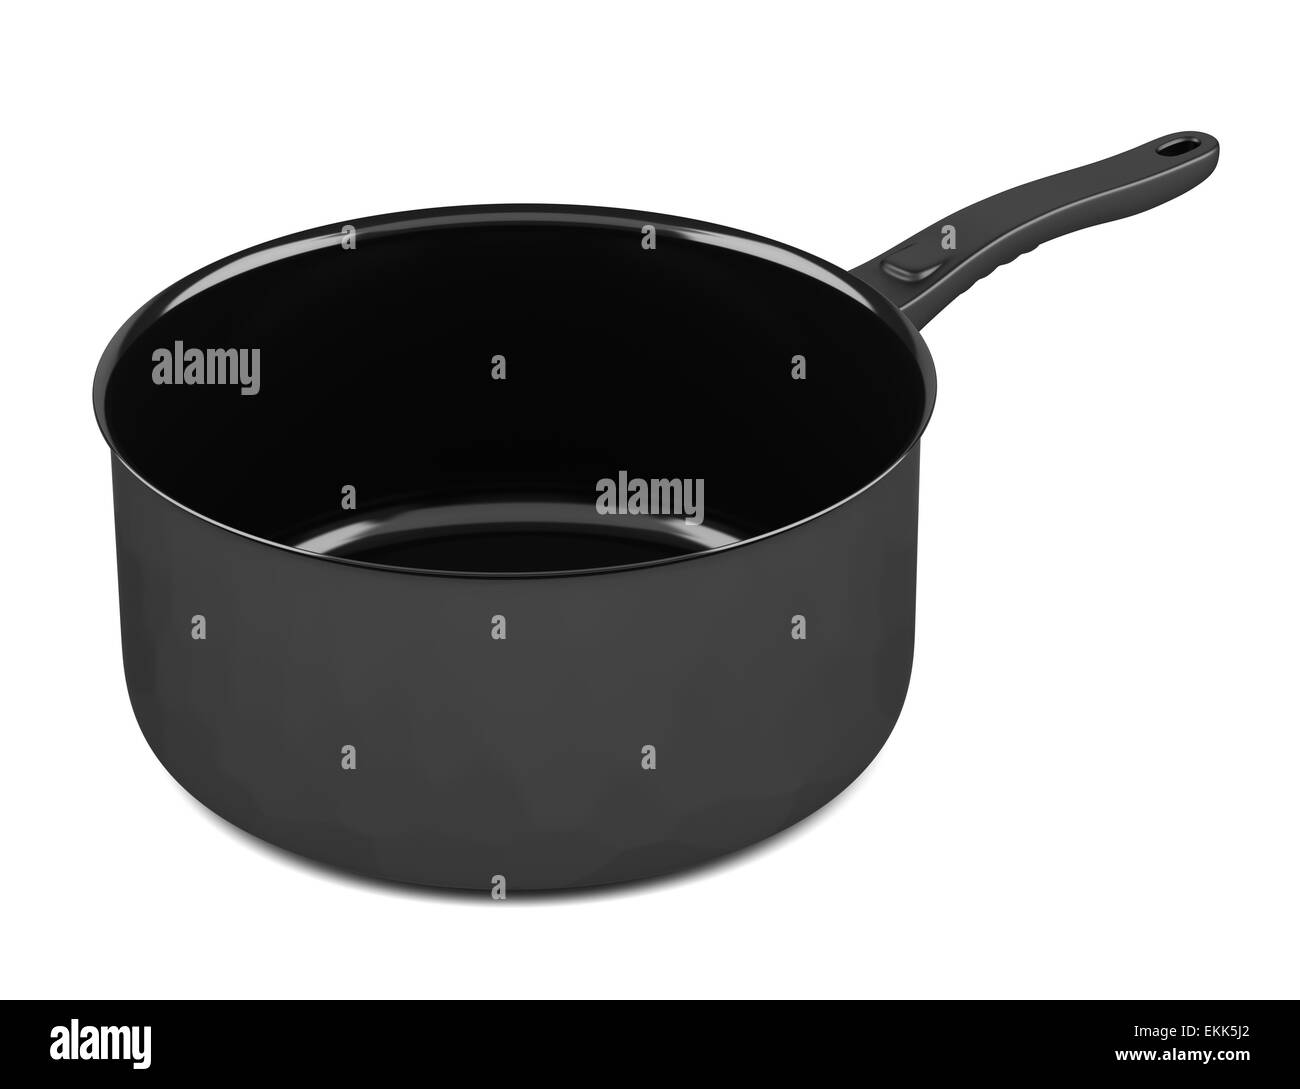 single black cooking pot isolated on white background Stock Photo